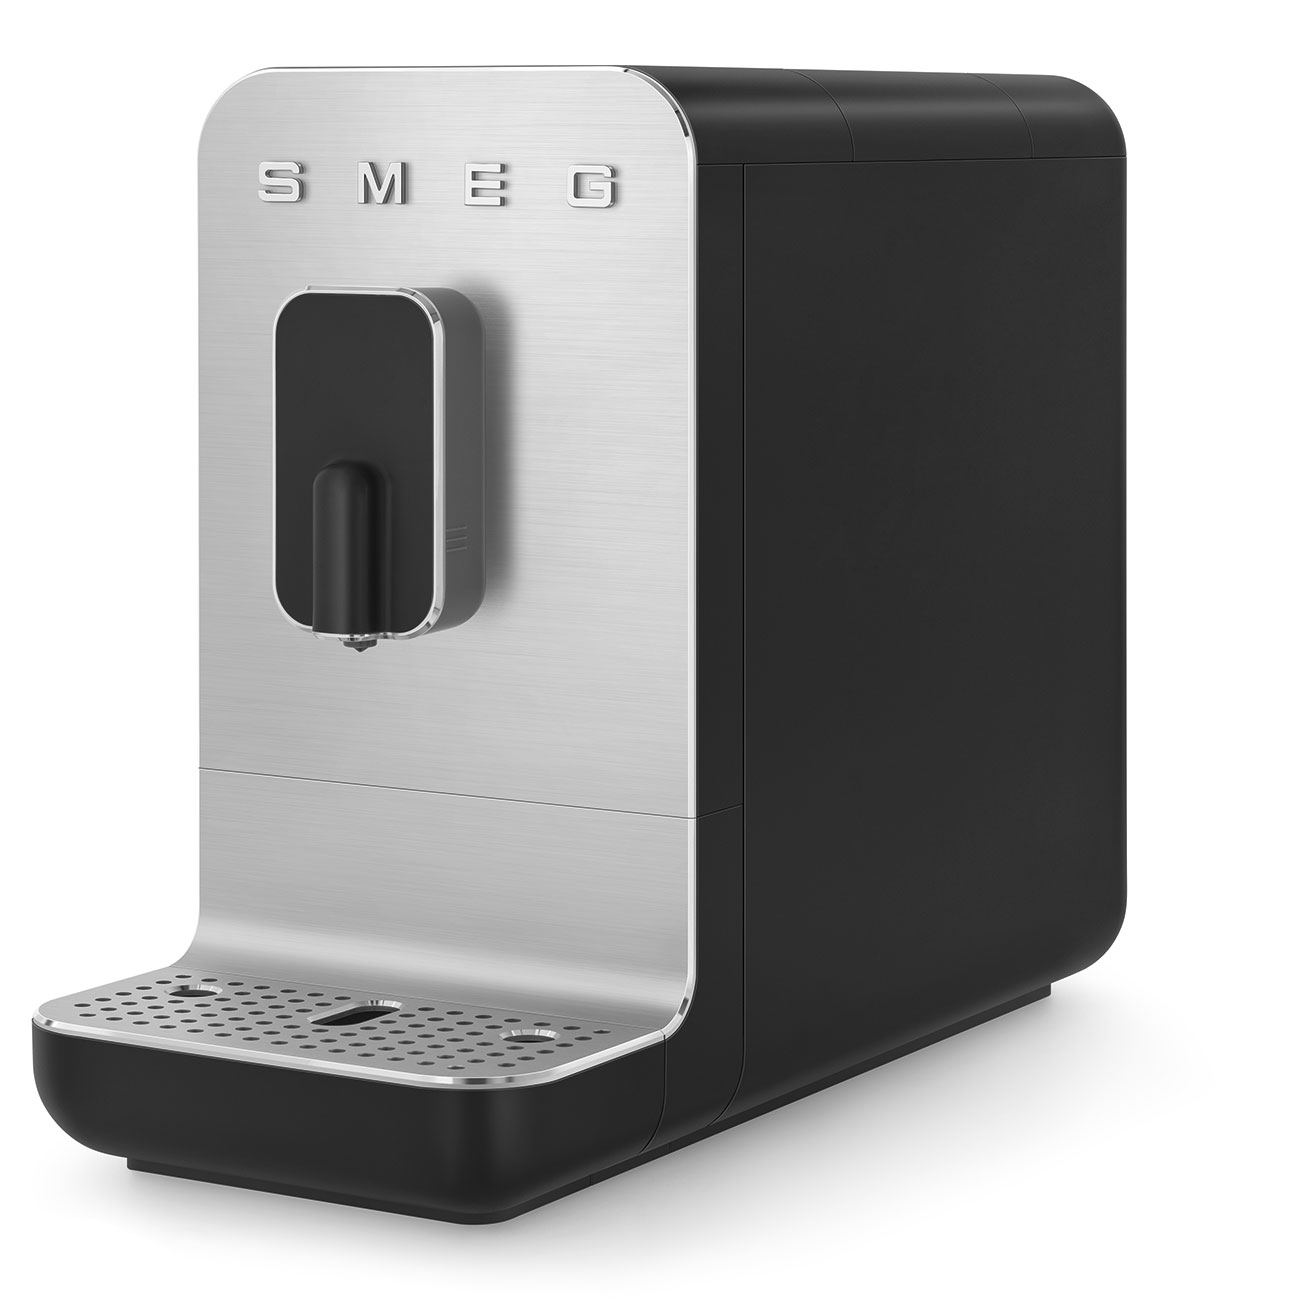 Smeg Black Espresso Manual Coffee Machine_6